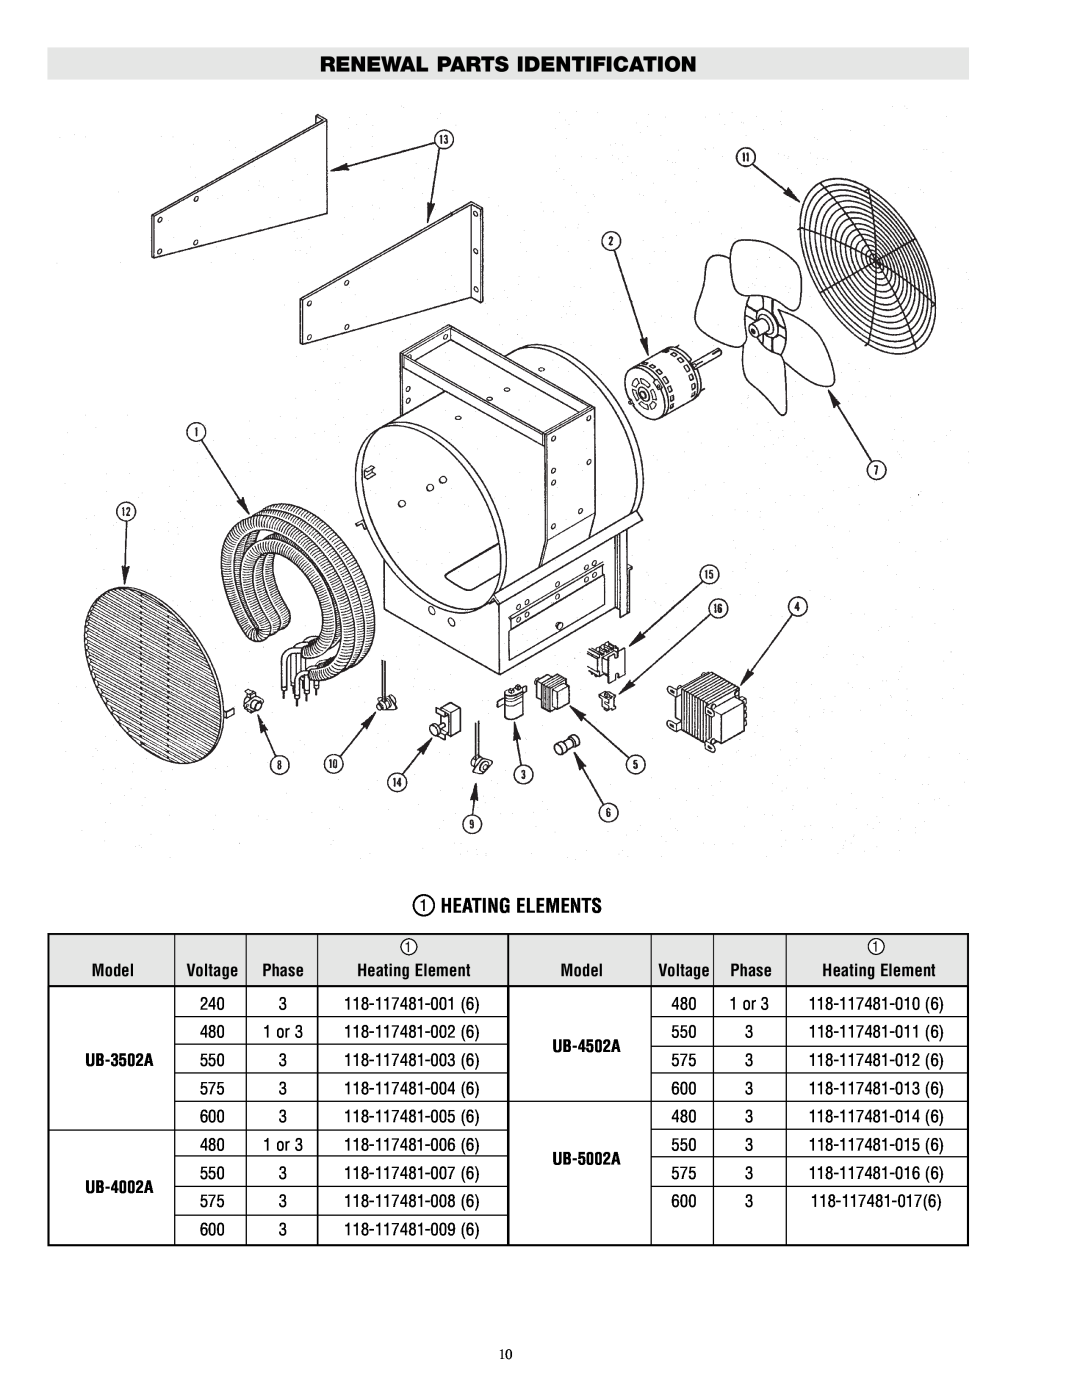 Chromalox UB-4502A, UB-3502A, UB-4002A, UB-5002A specifications Renewal Parts Identification, 1HEATING ELEMENTS 